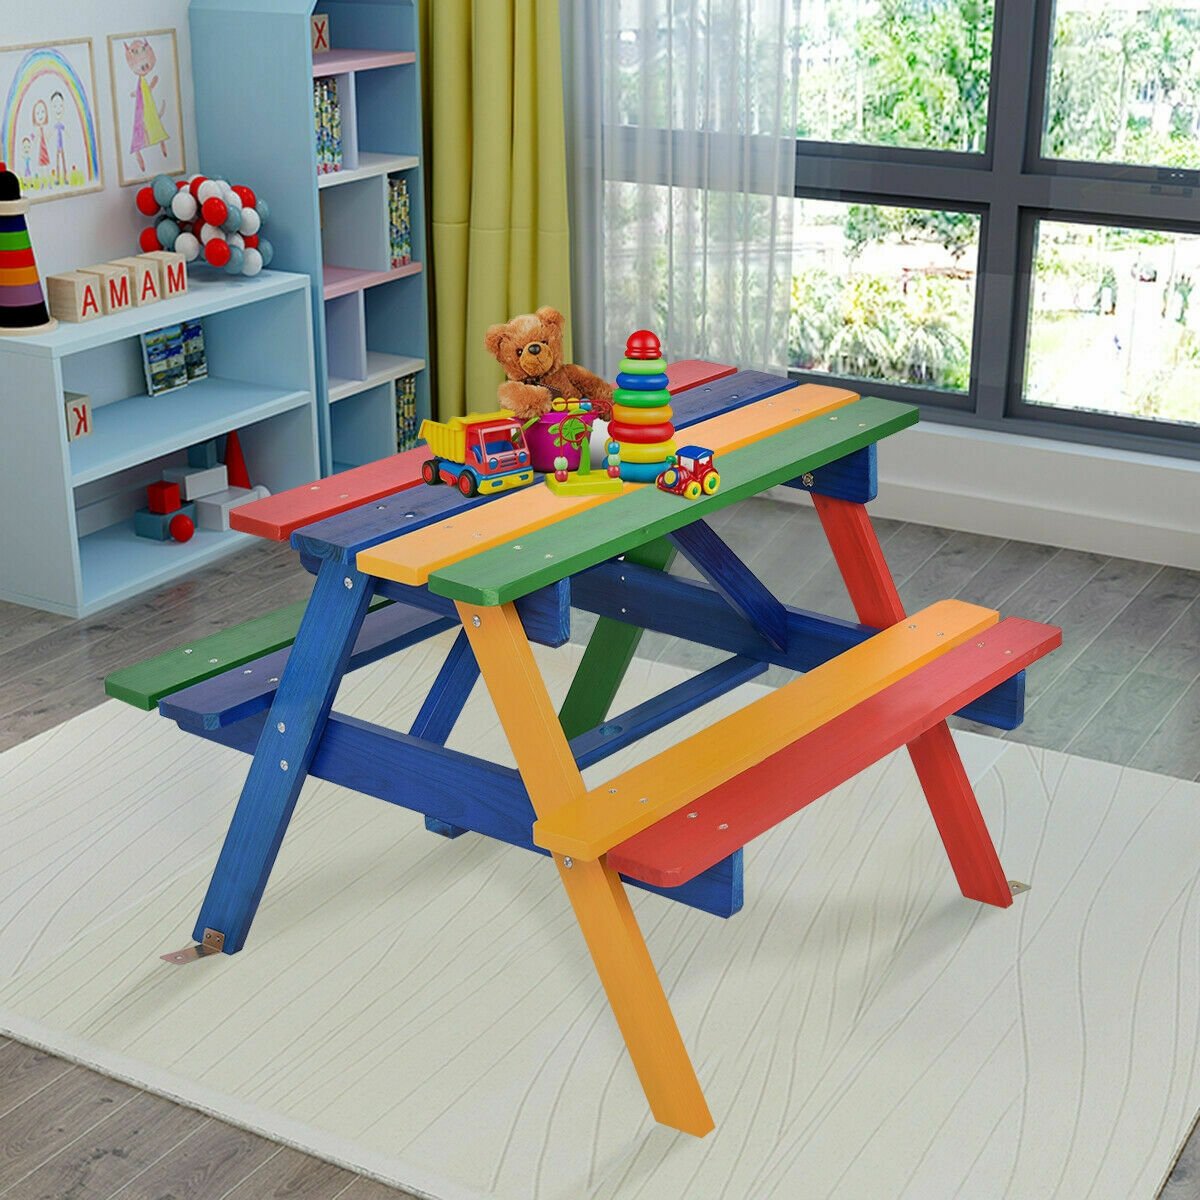 4 Seat Kids Picnic Table with Umbrella, Multicolor